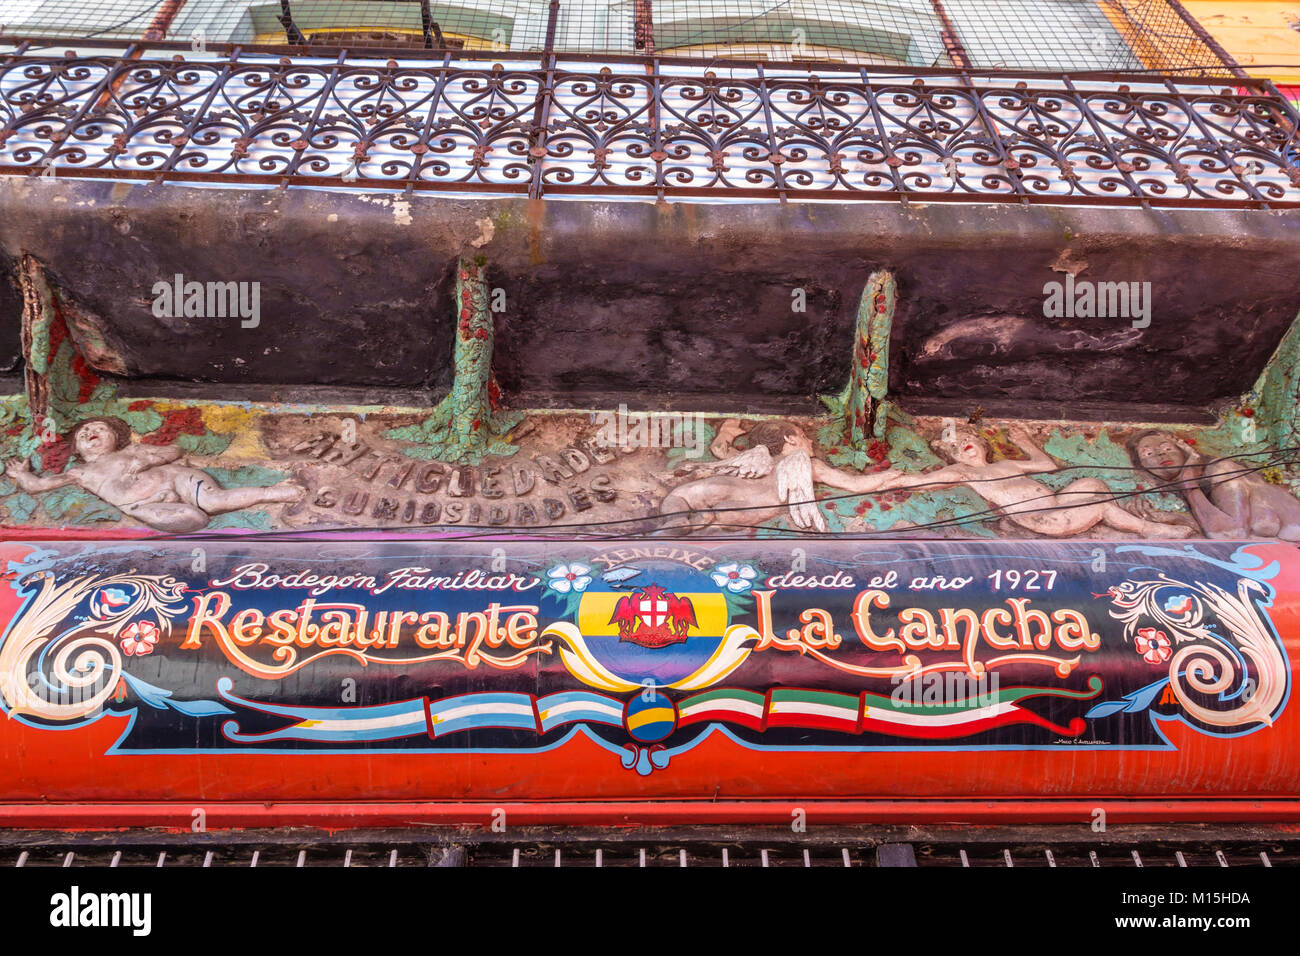 Buenos Aires Argentina,Caminito Barrio de la Boca,street museum,historic immigrant neighborhood,La Cancha,restaurant restaurants food dining cafe cafe Stock Photo